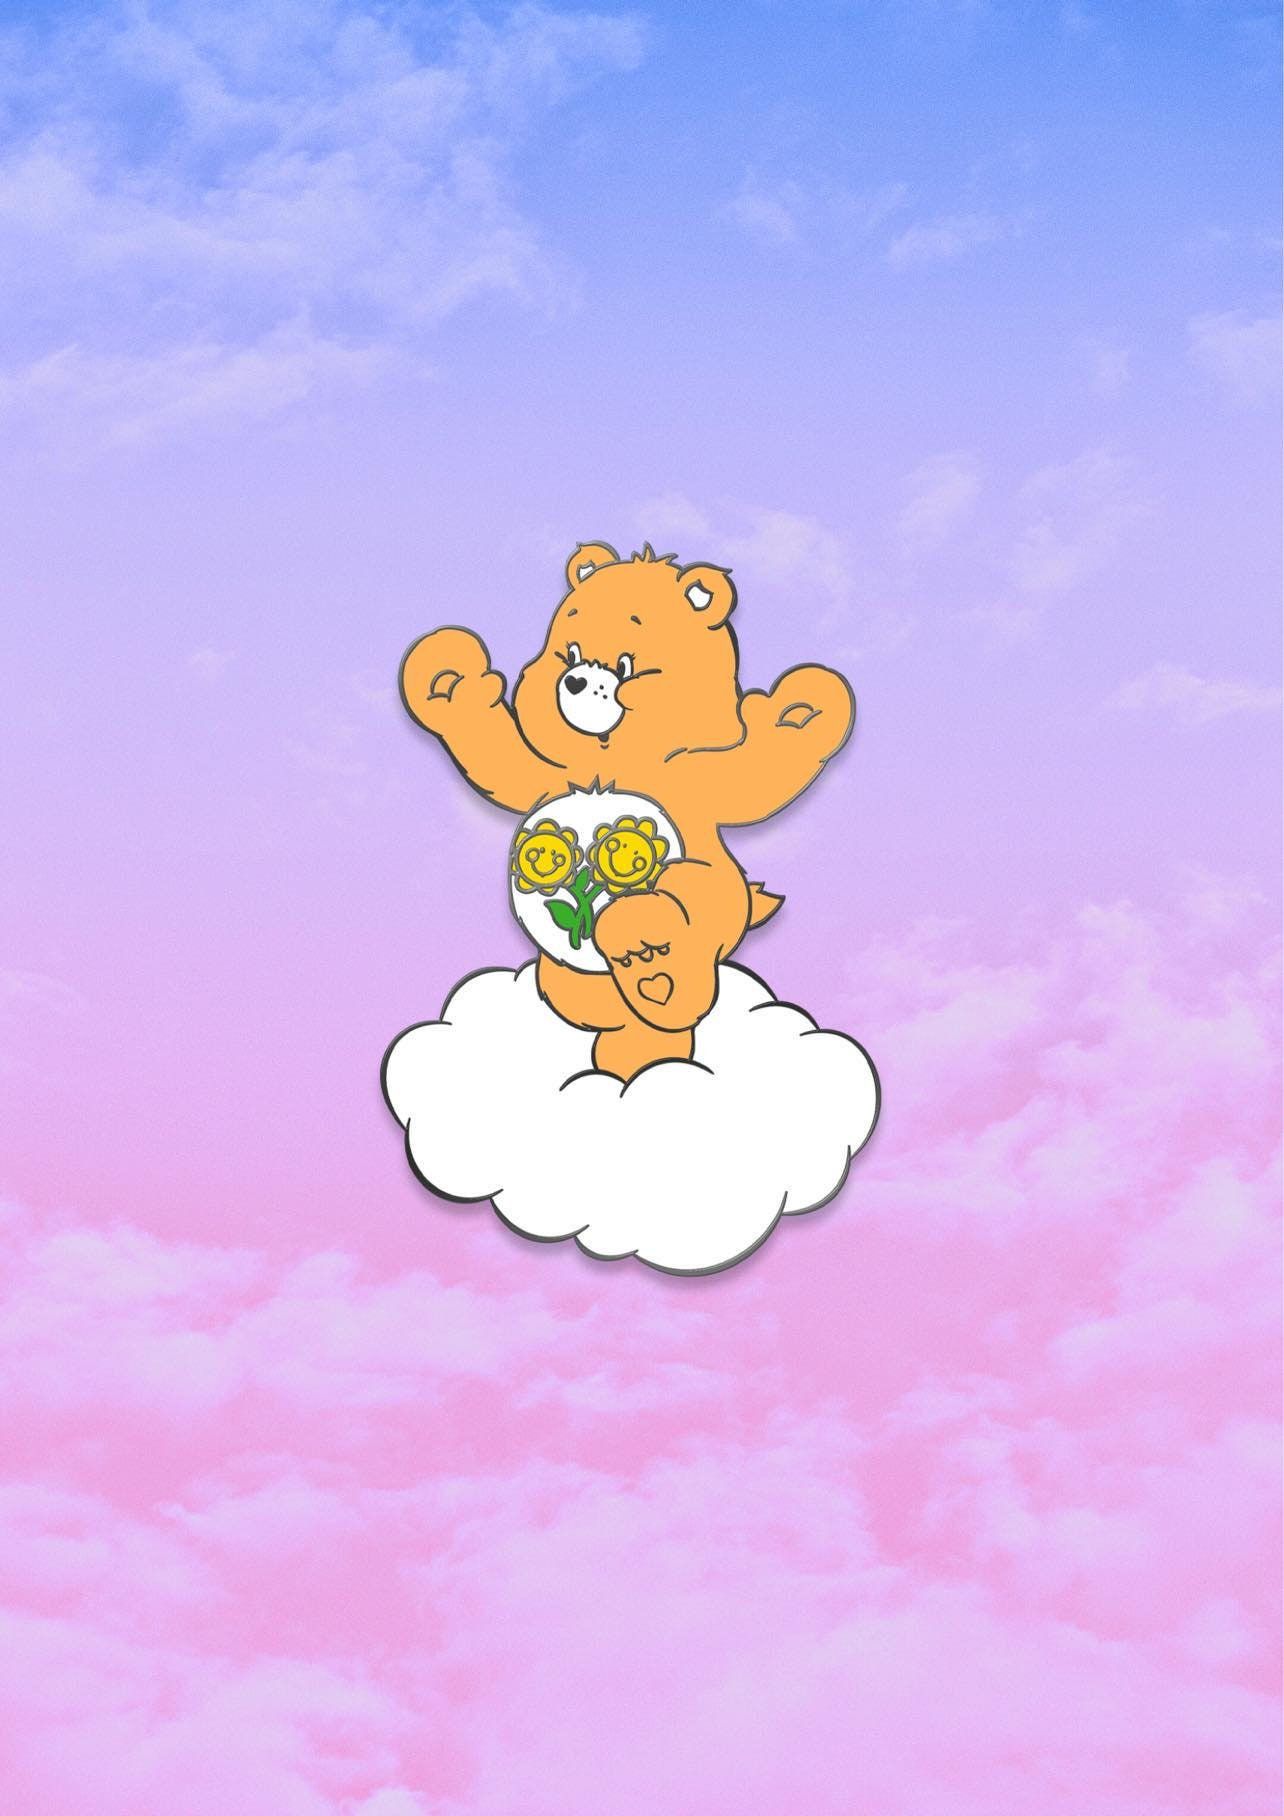 A grumpy bear sitting on a cloud - Care Bears